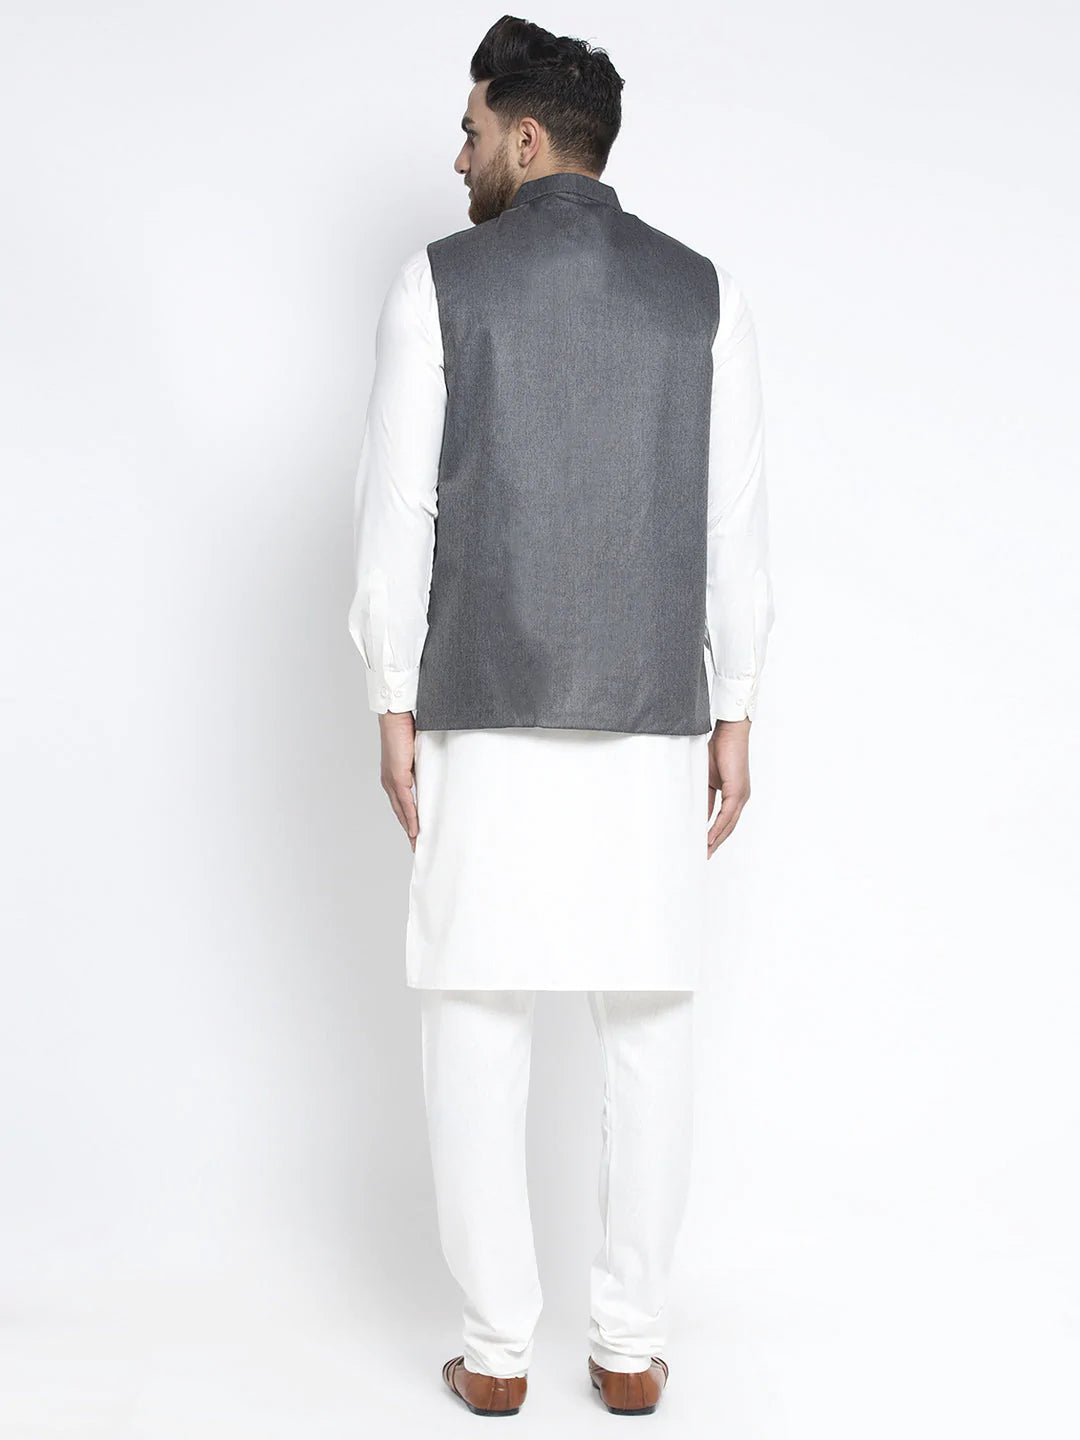 Jompers Men's Solid White Cotton Kurta Payjama with Solid Charcoal Waistcoat ( JOKPWC OW-F 4021 Charcoal )